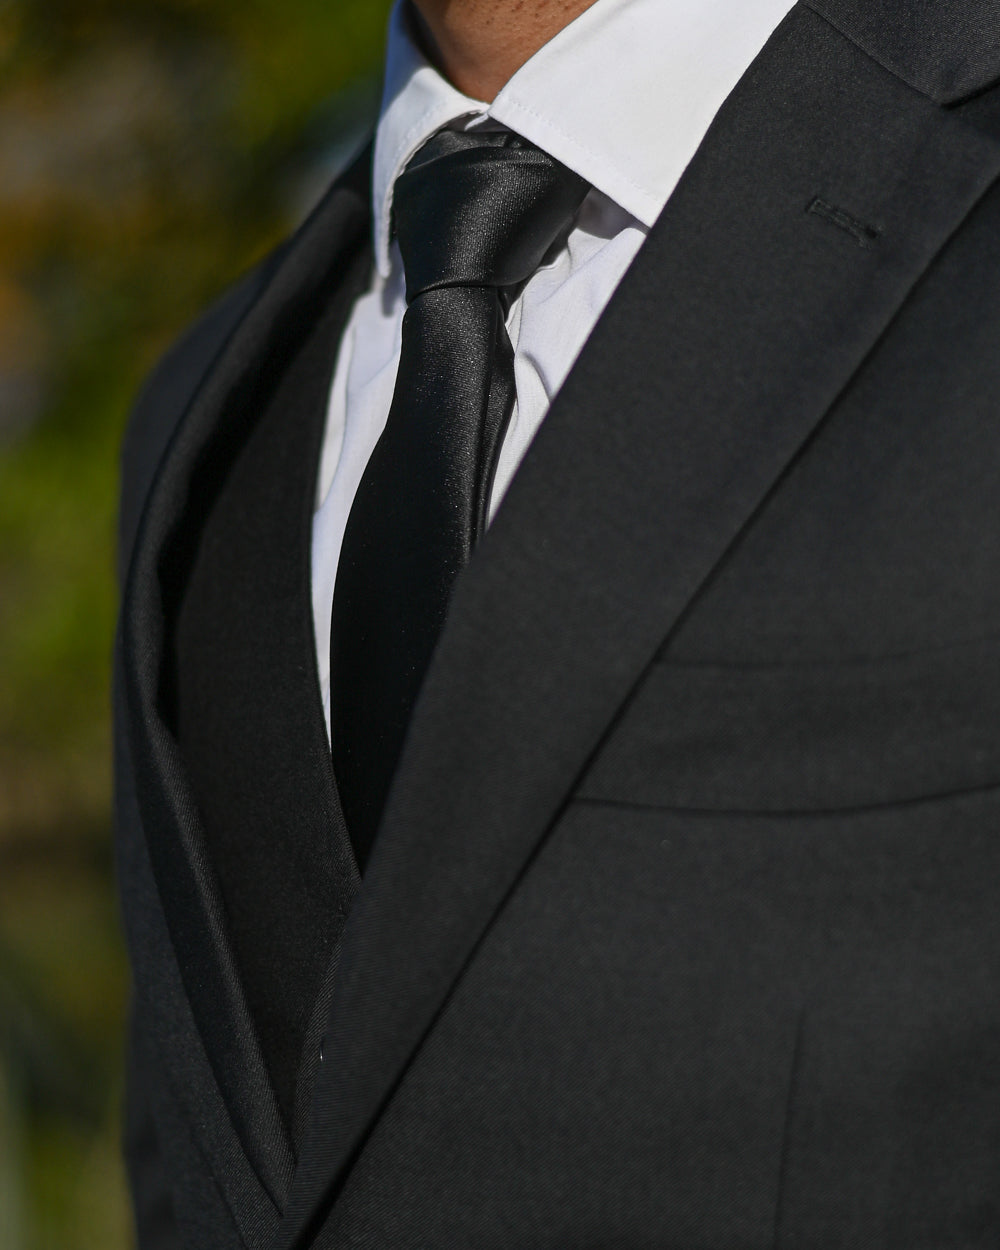 Black silk-look tie worn with a black three-piece suit